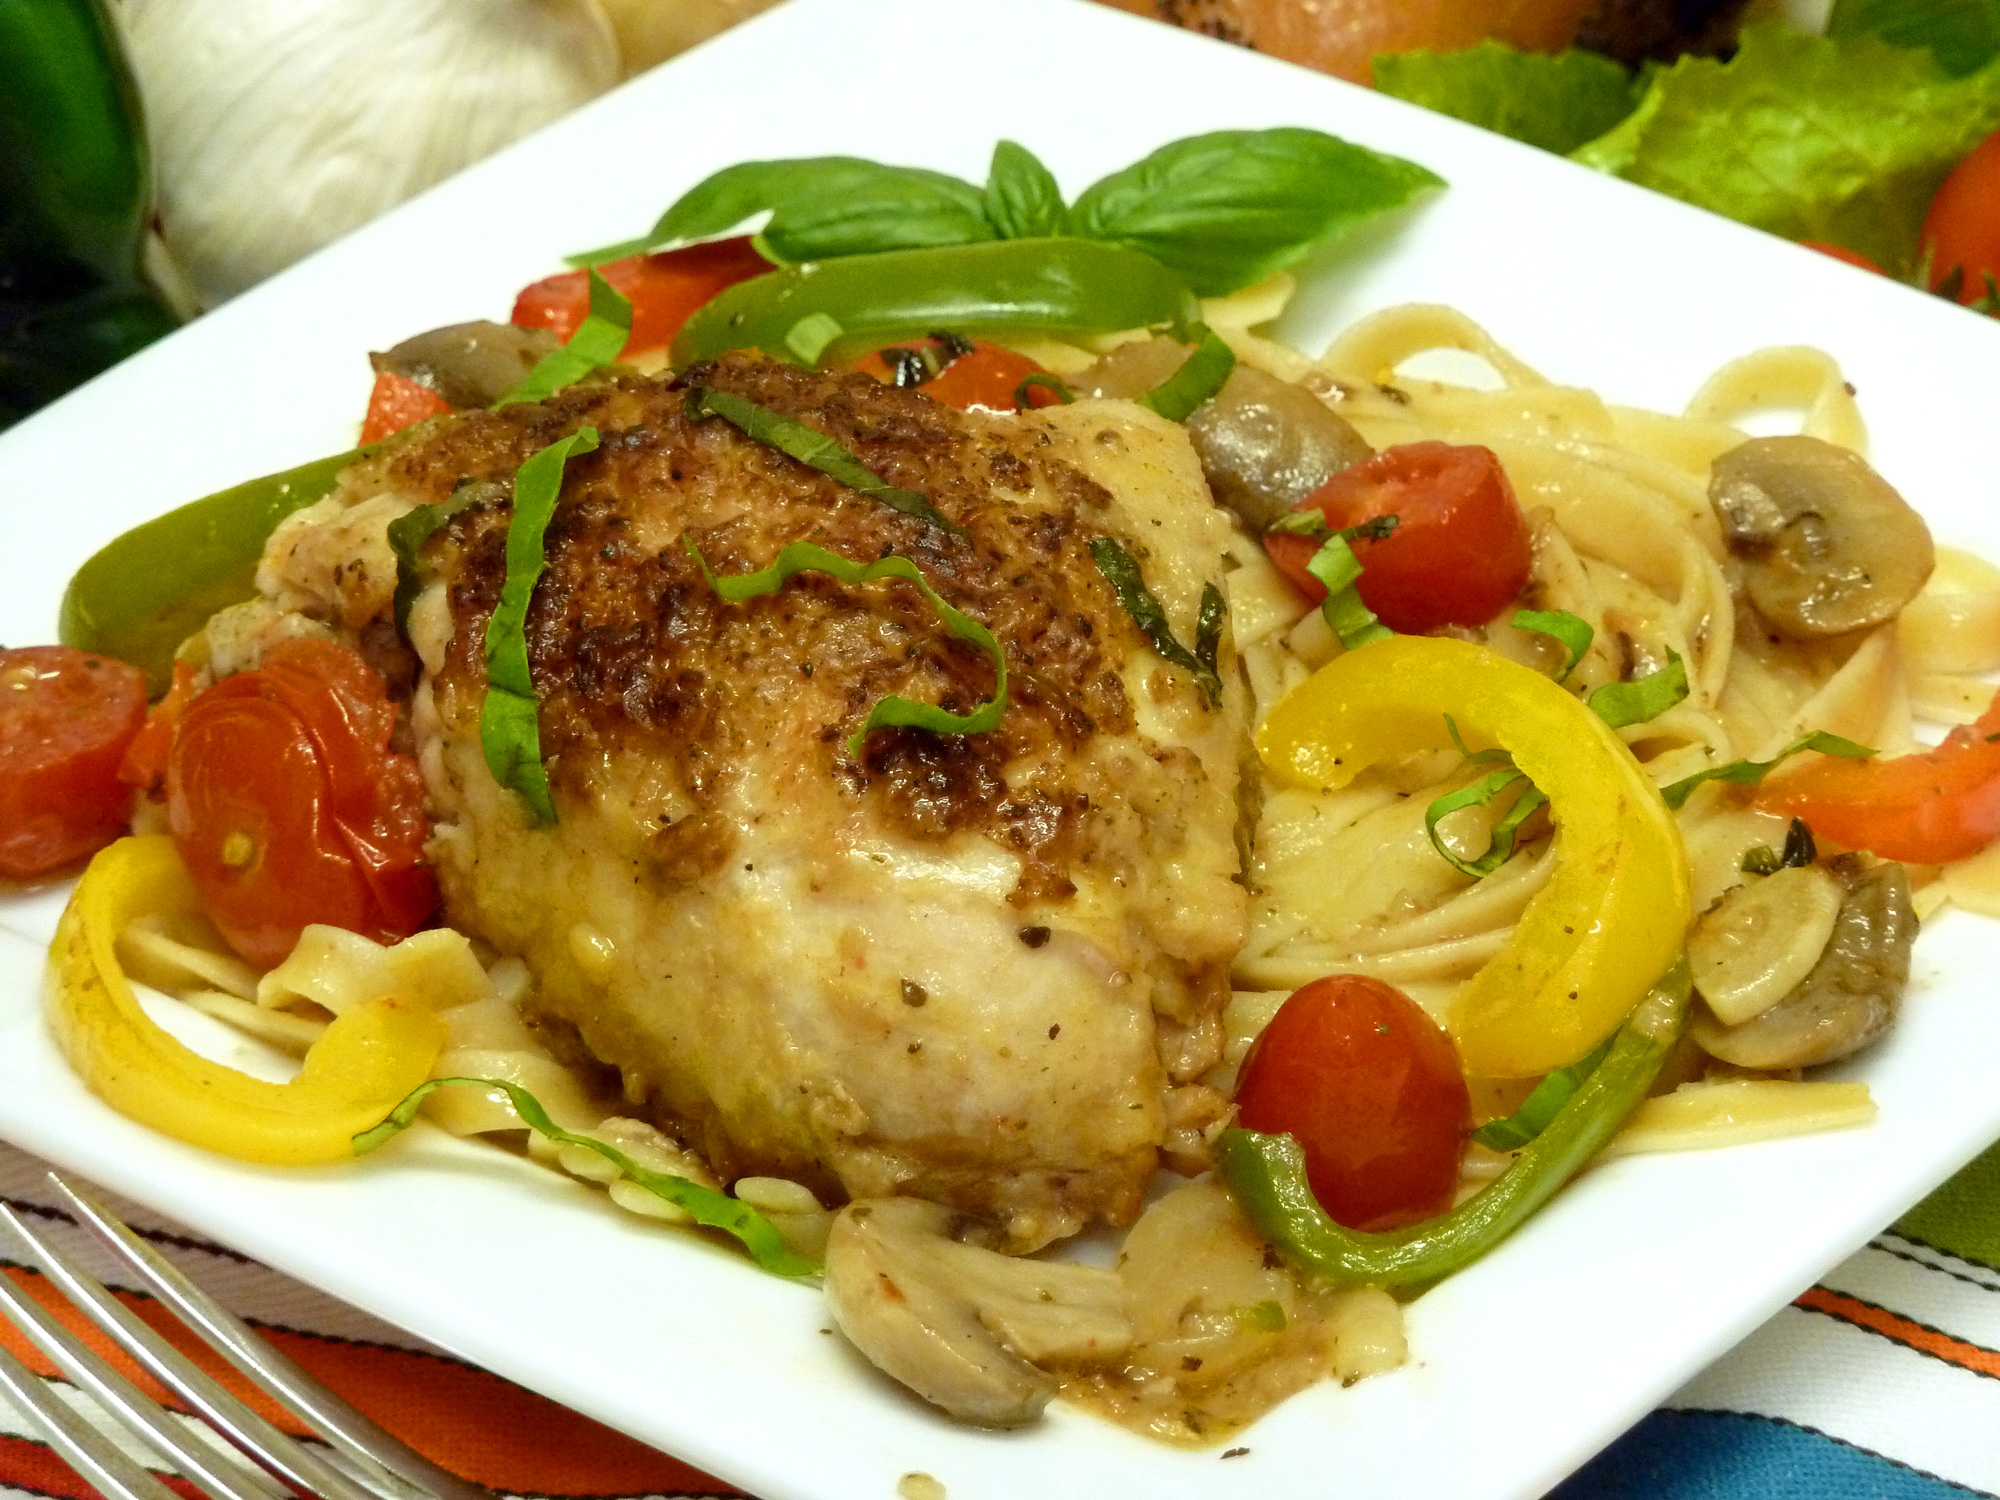 Tender chicken cacciatora celebrates the Italian flavors of chicken, oregano, basil, garlic, and fresh vegetables over pasta.